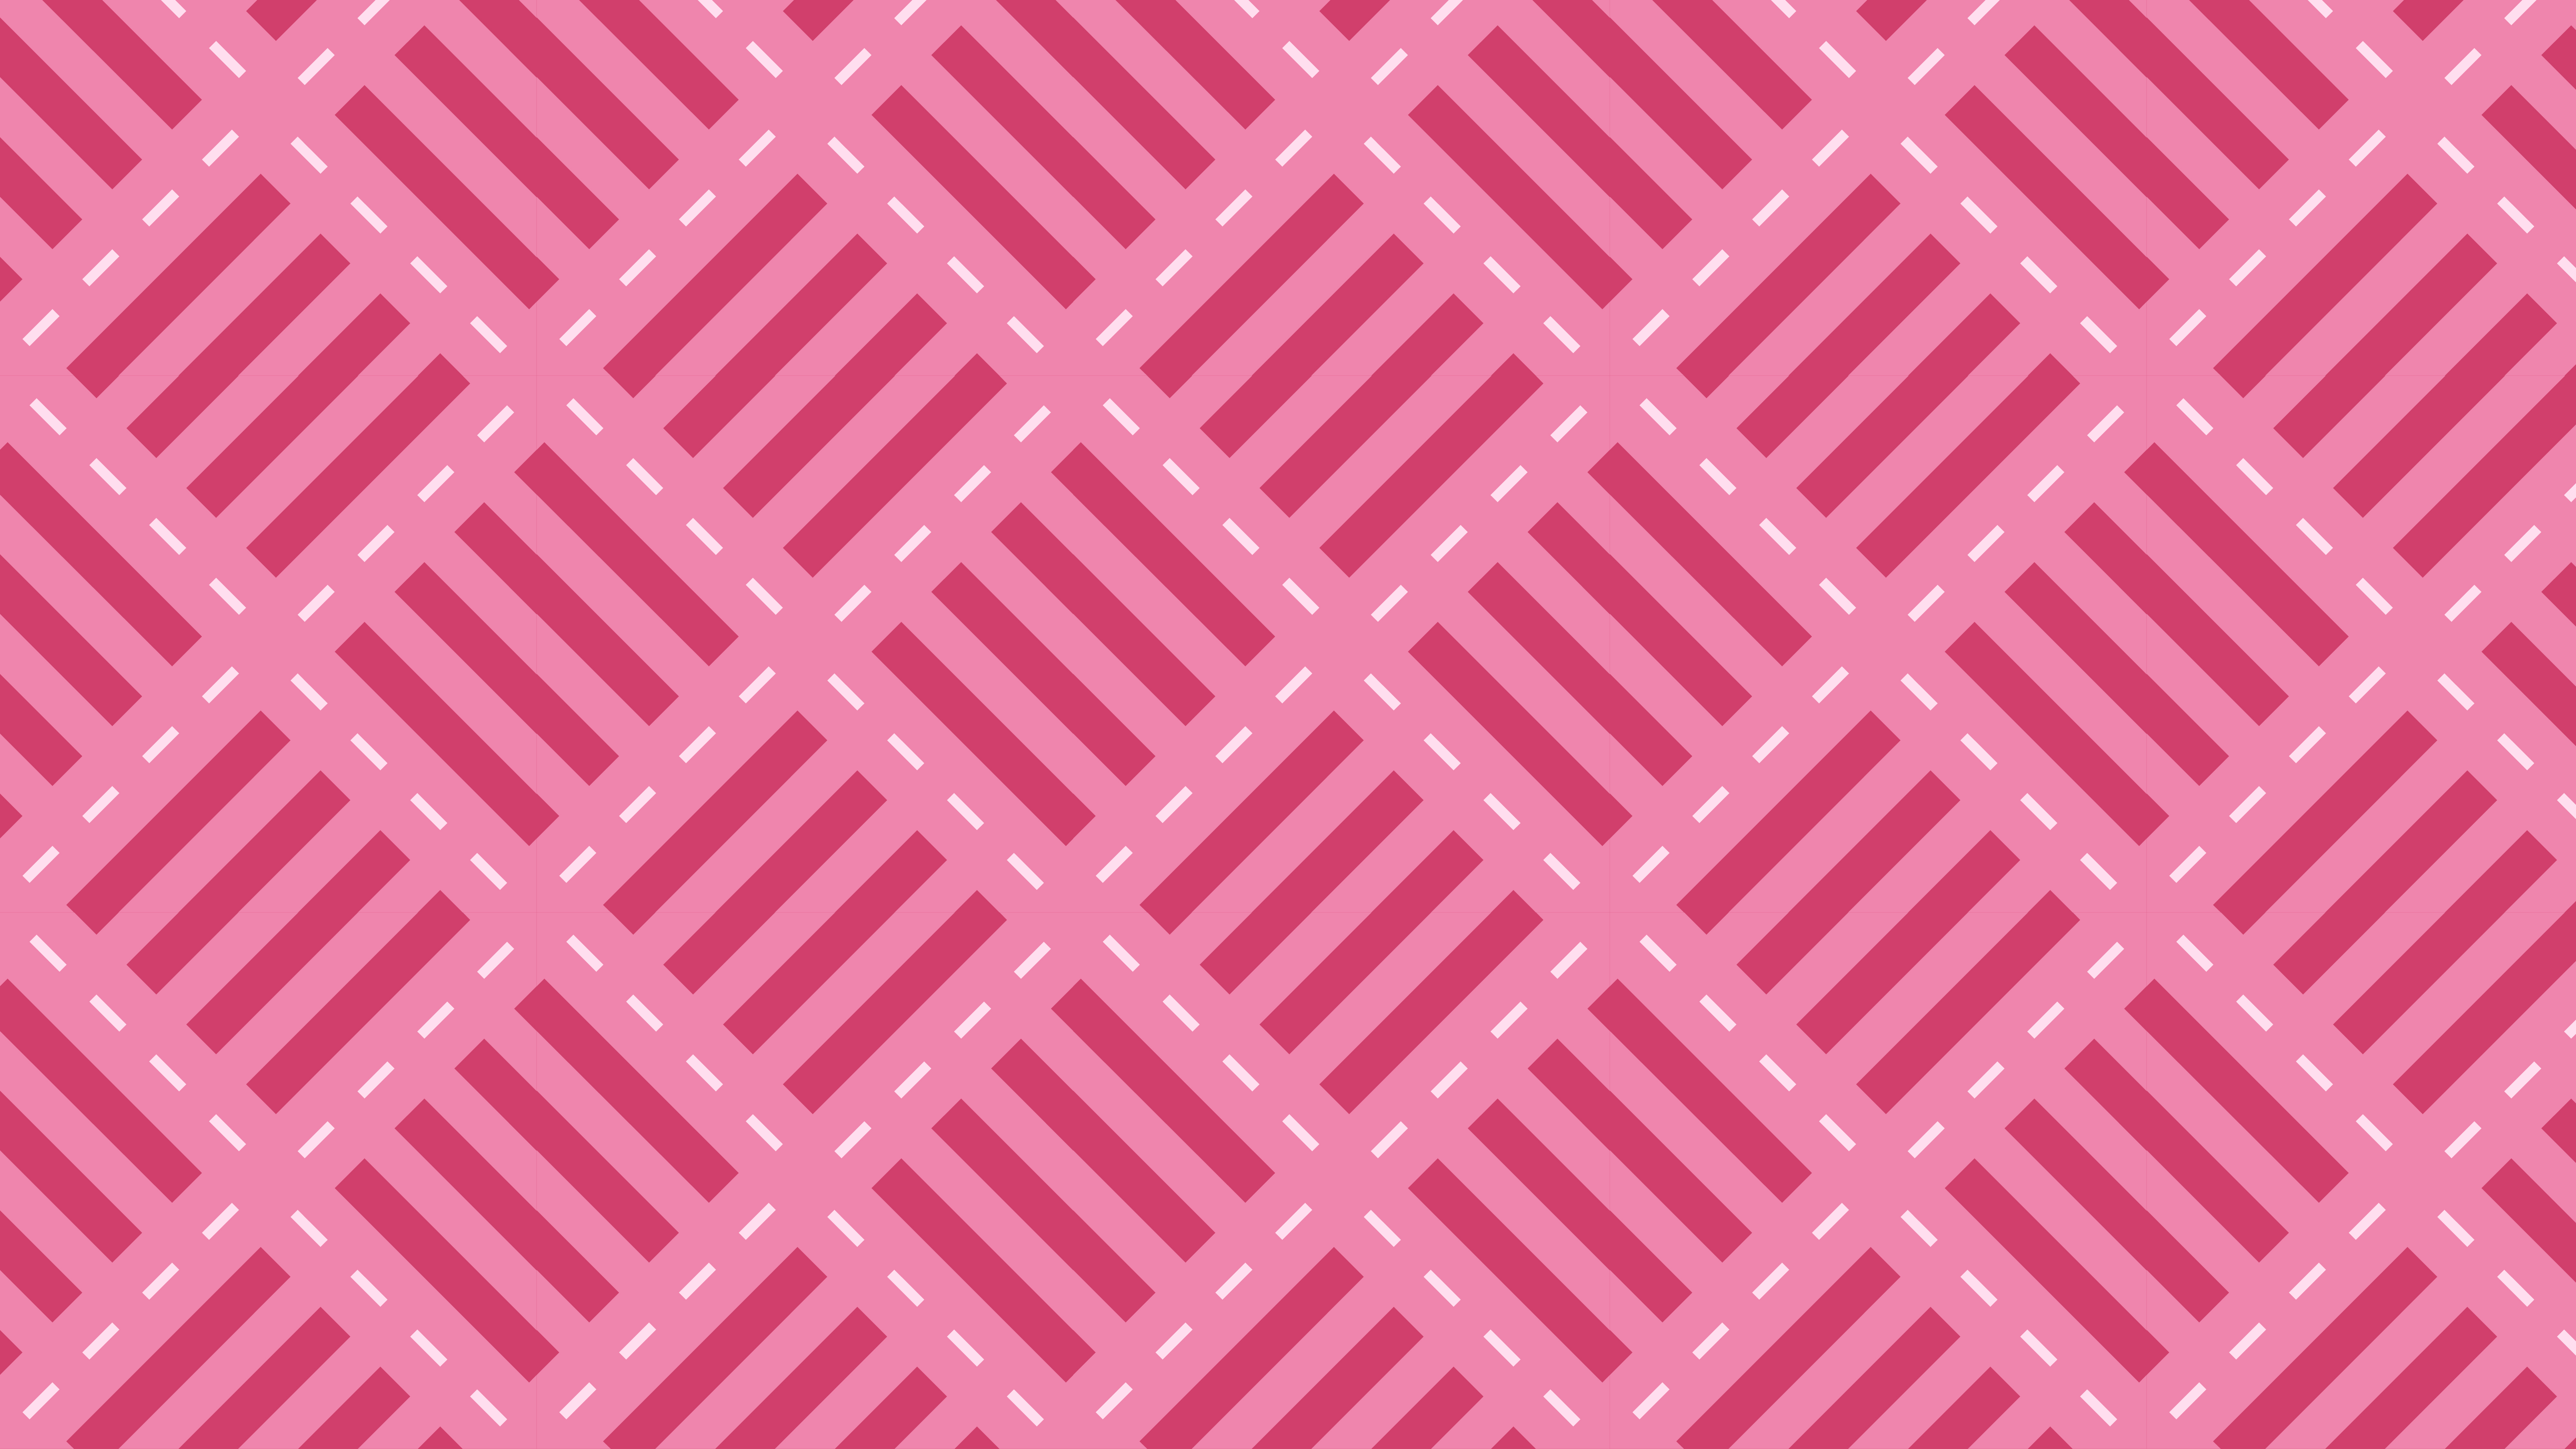 https://files.123freevectors.com/wp-content/original/104105-pink-stripes-pattern.jpg